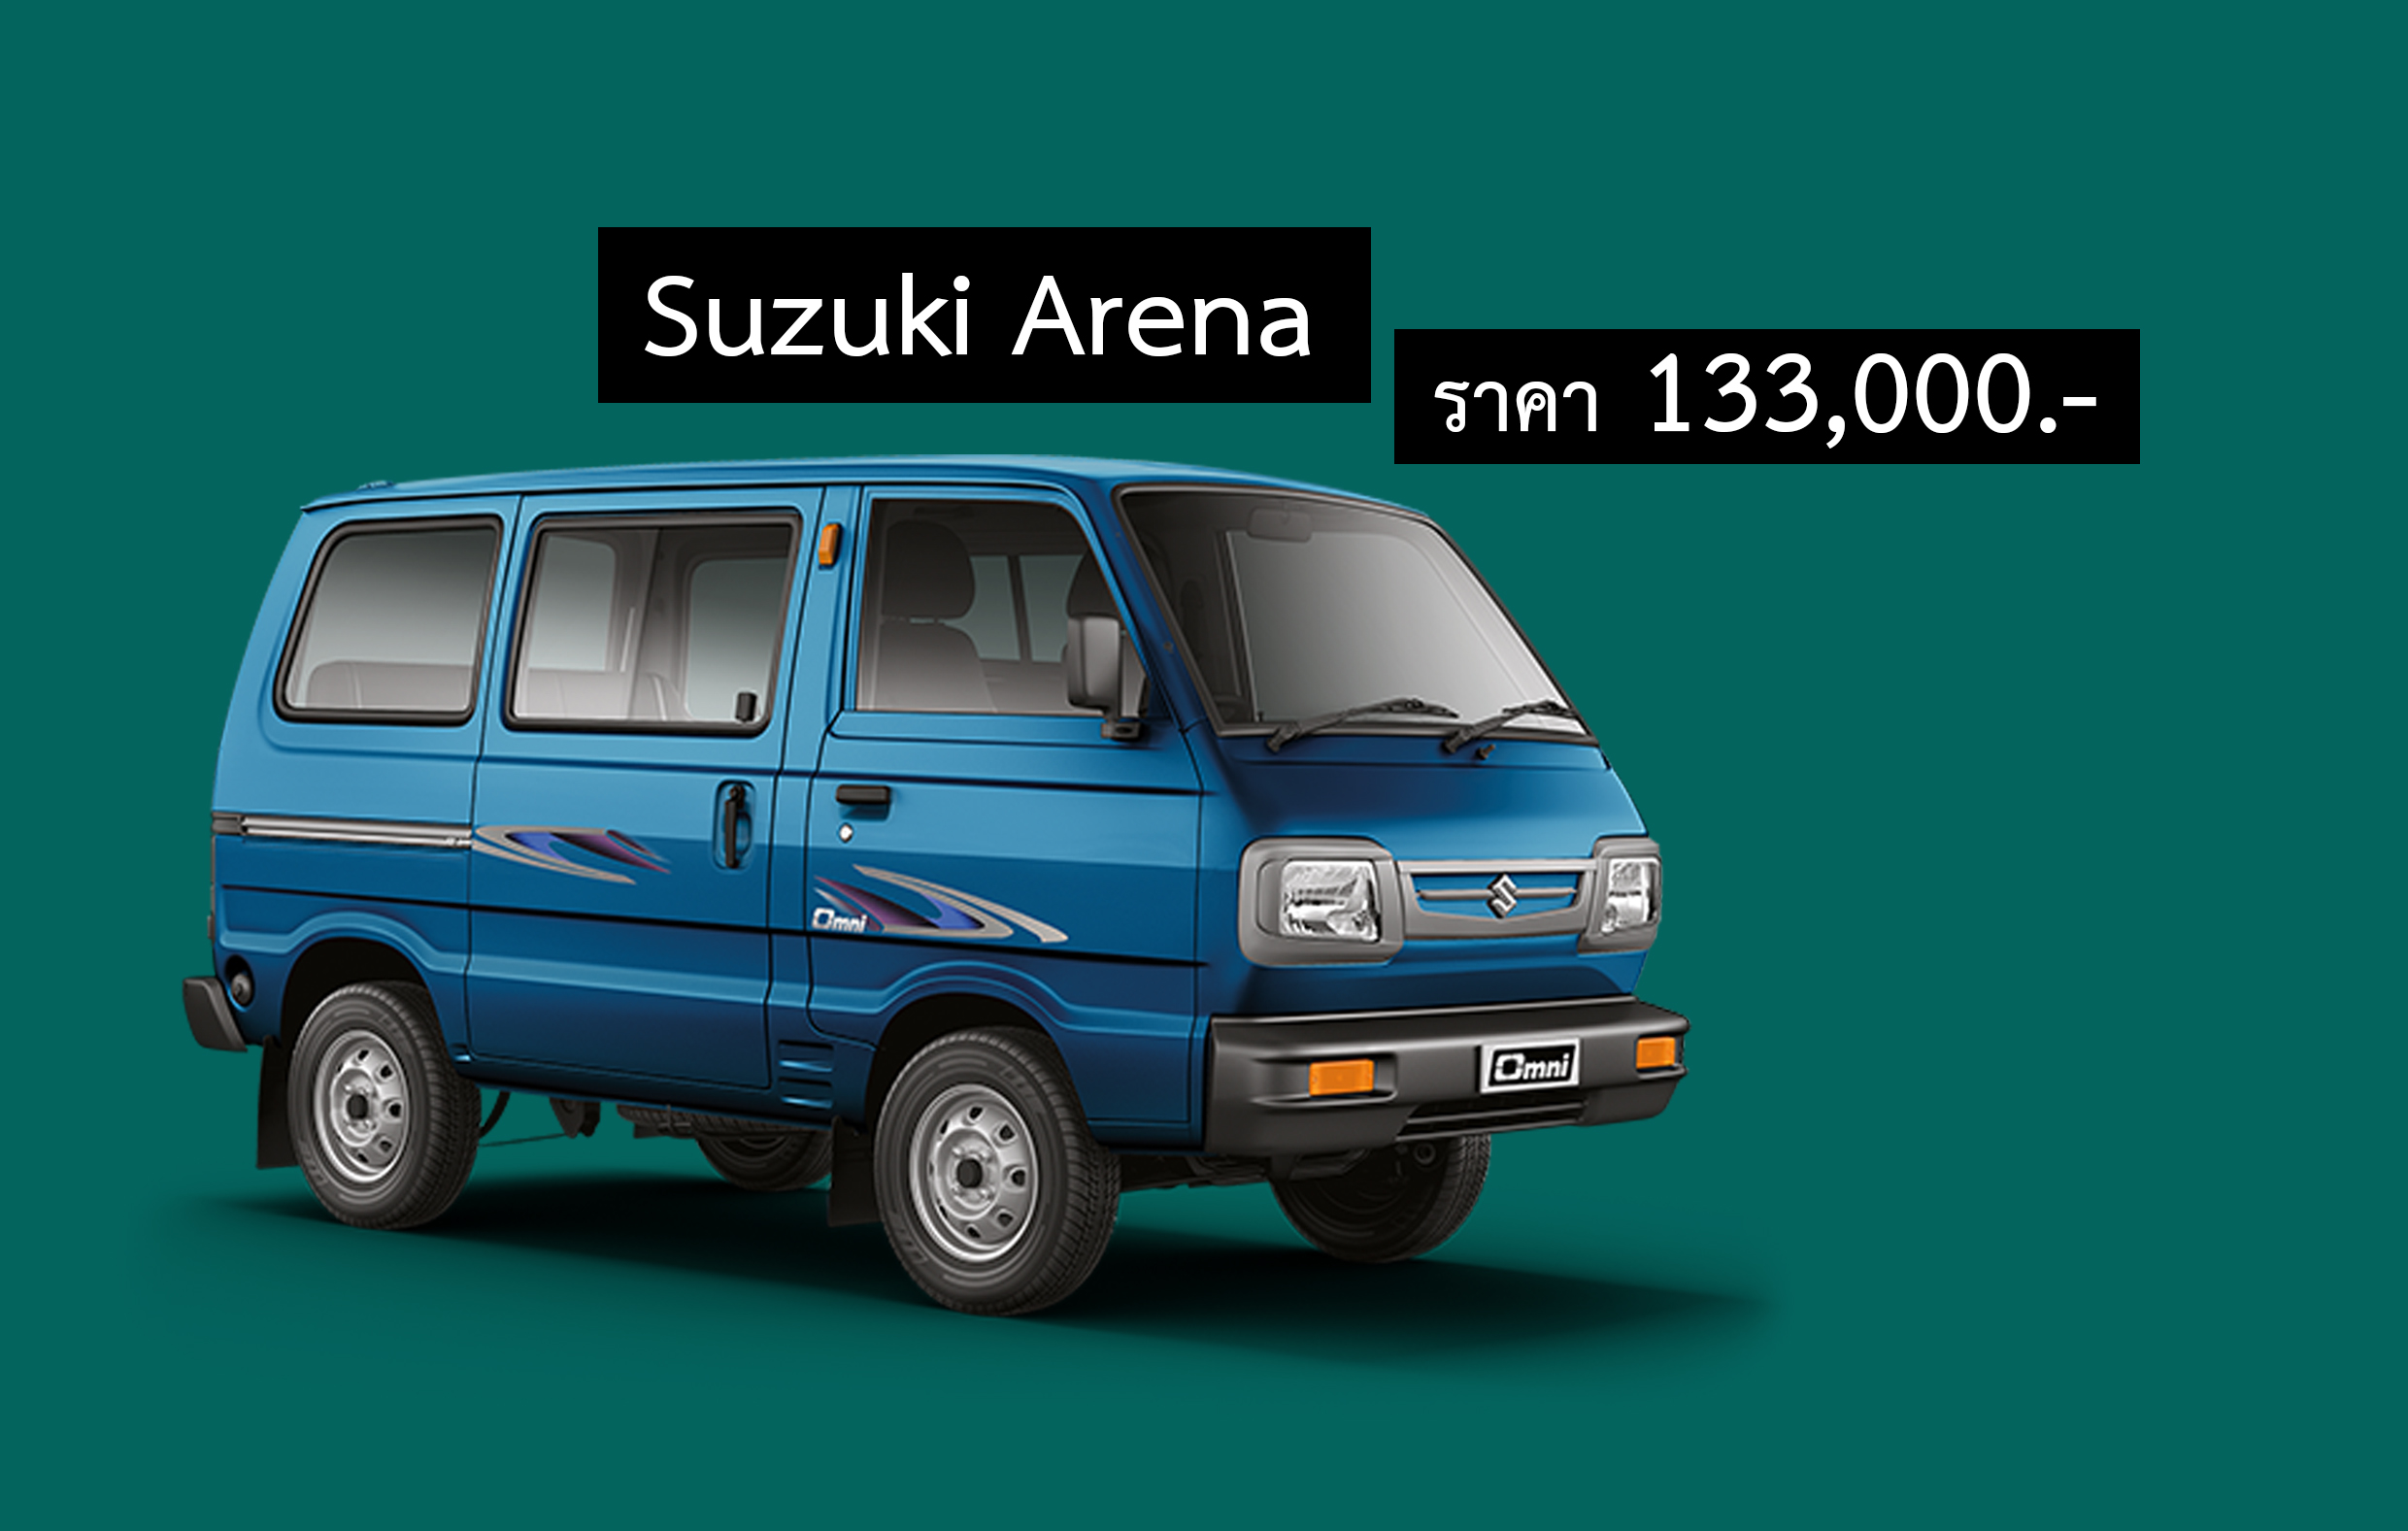 Suzuki Arena แวนอินเดีย ราคา 133,000 บาท ถูกสุดๆ